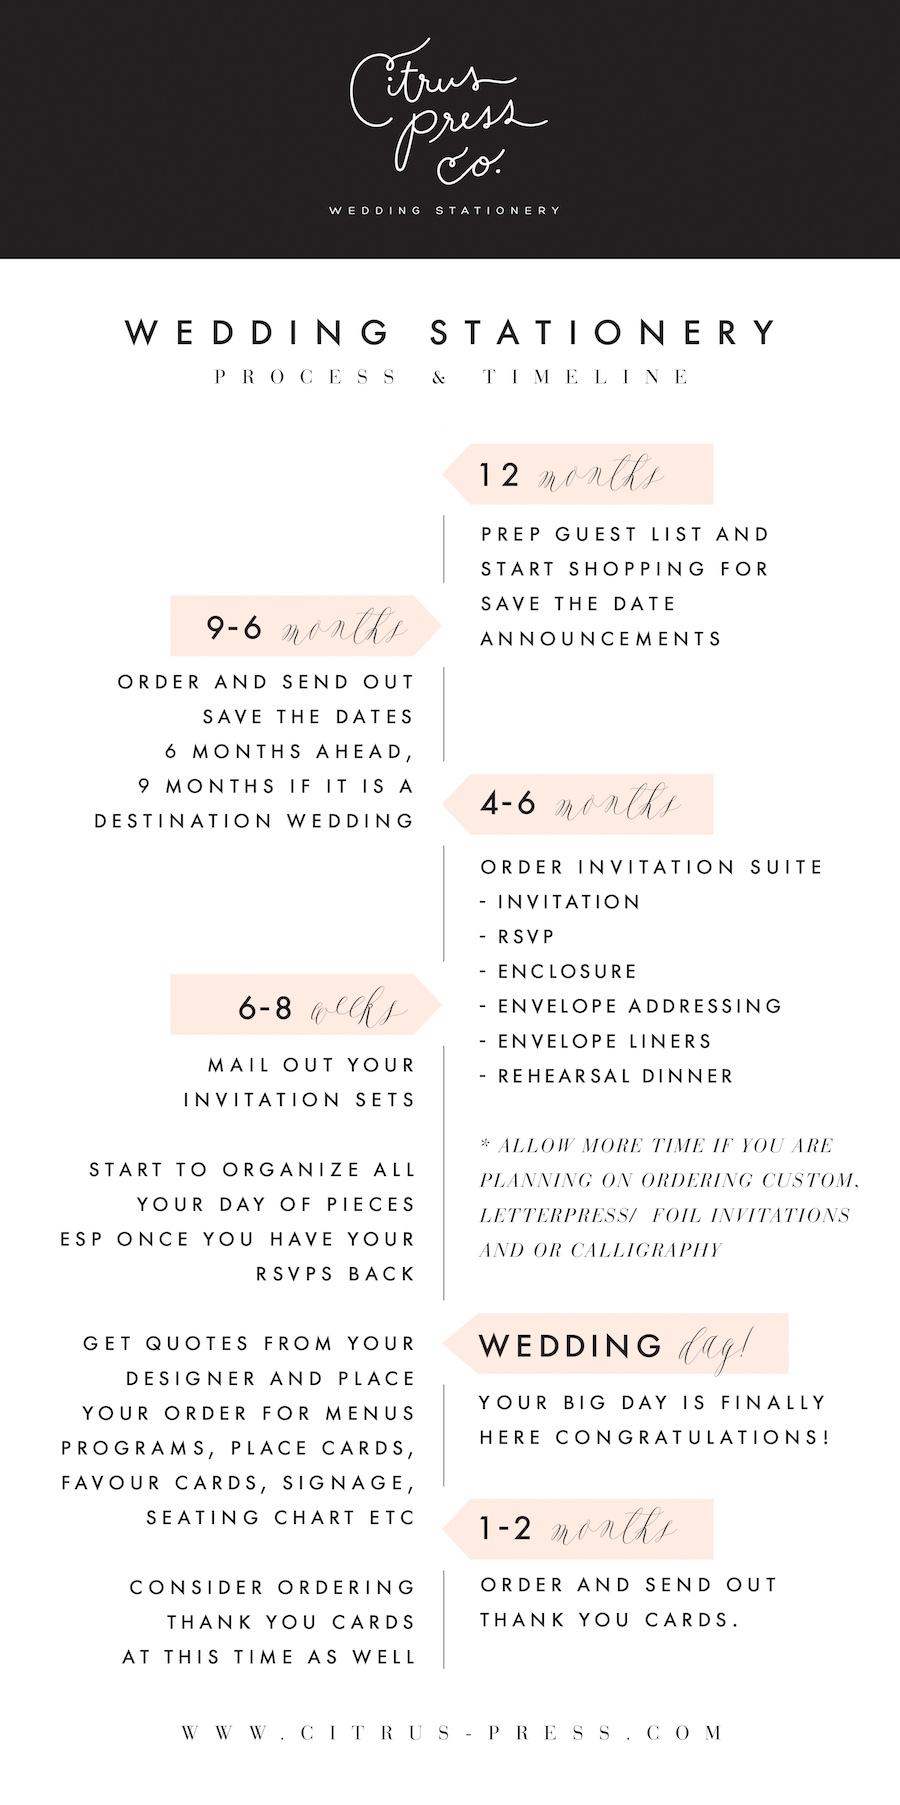 Wedding Stationery Process and Timeline | Citrus Press Co. Wedding Invitations